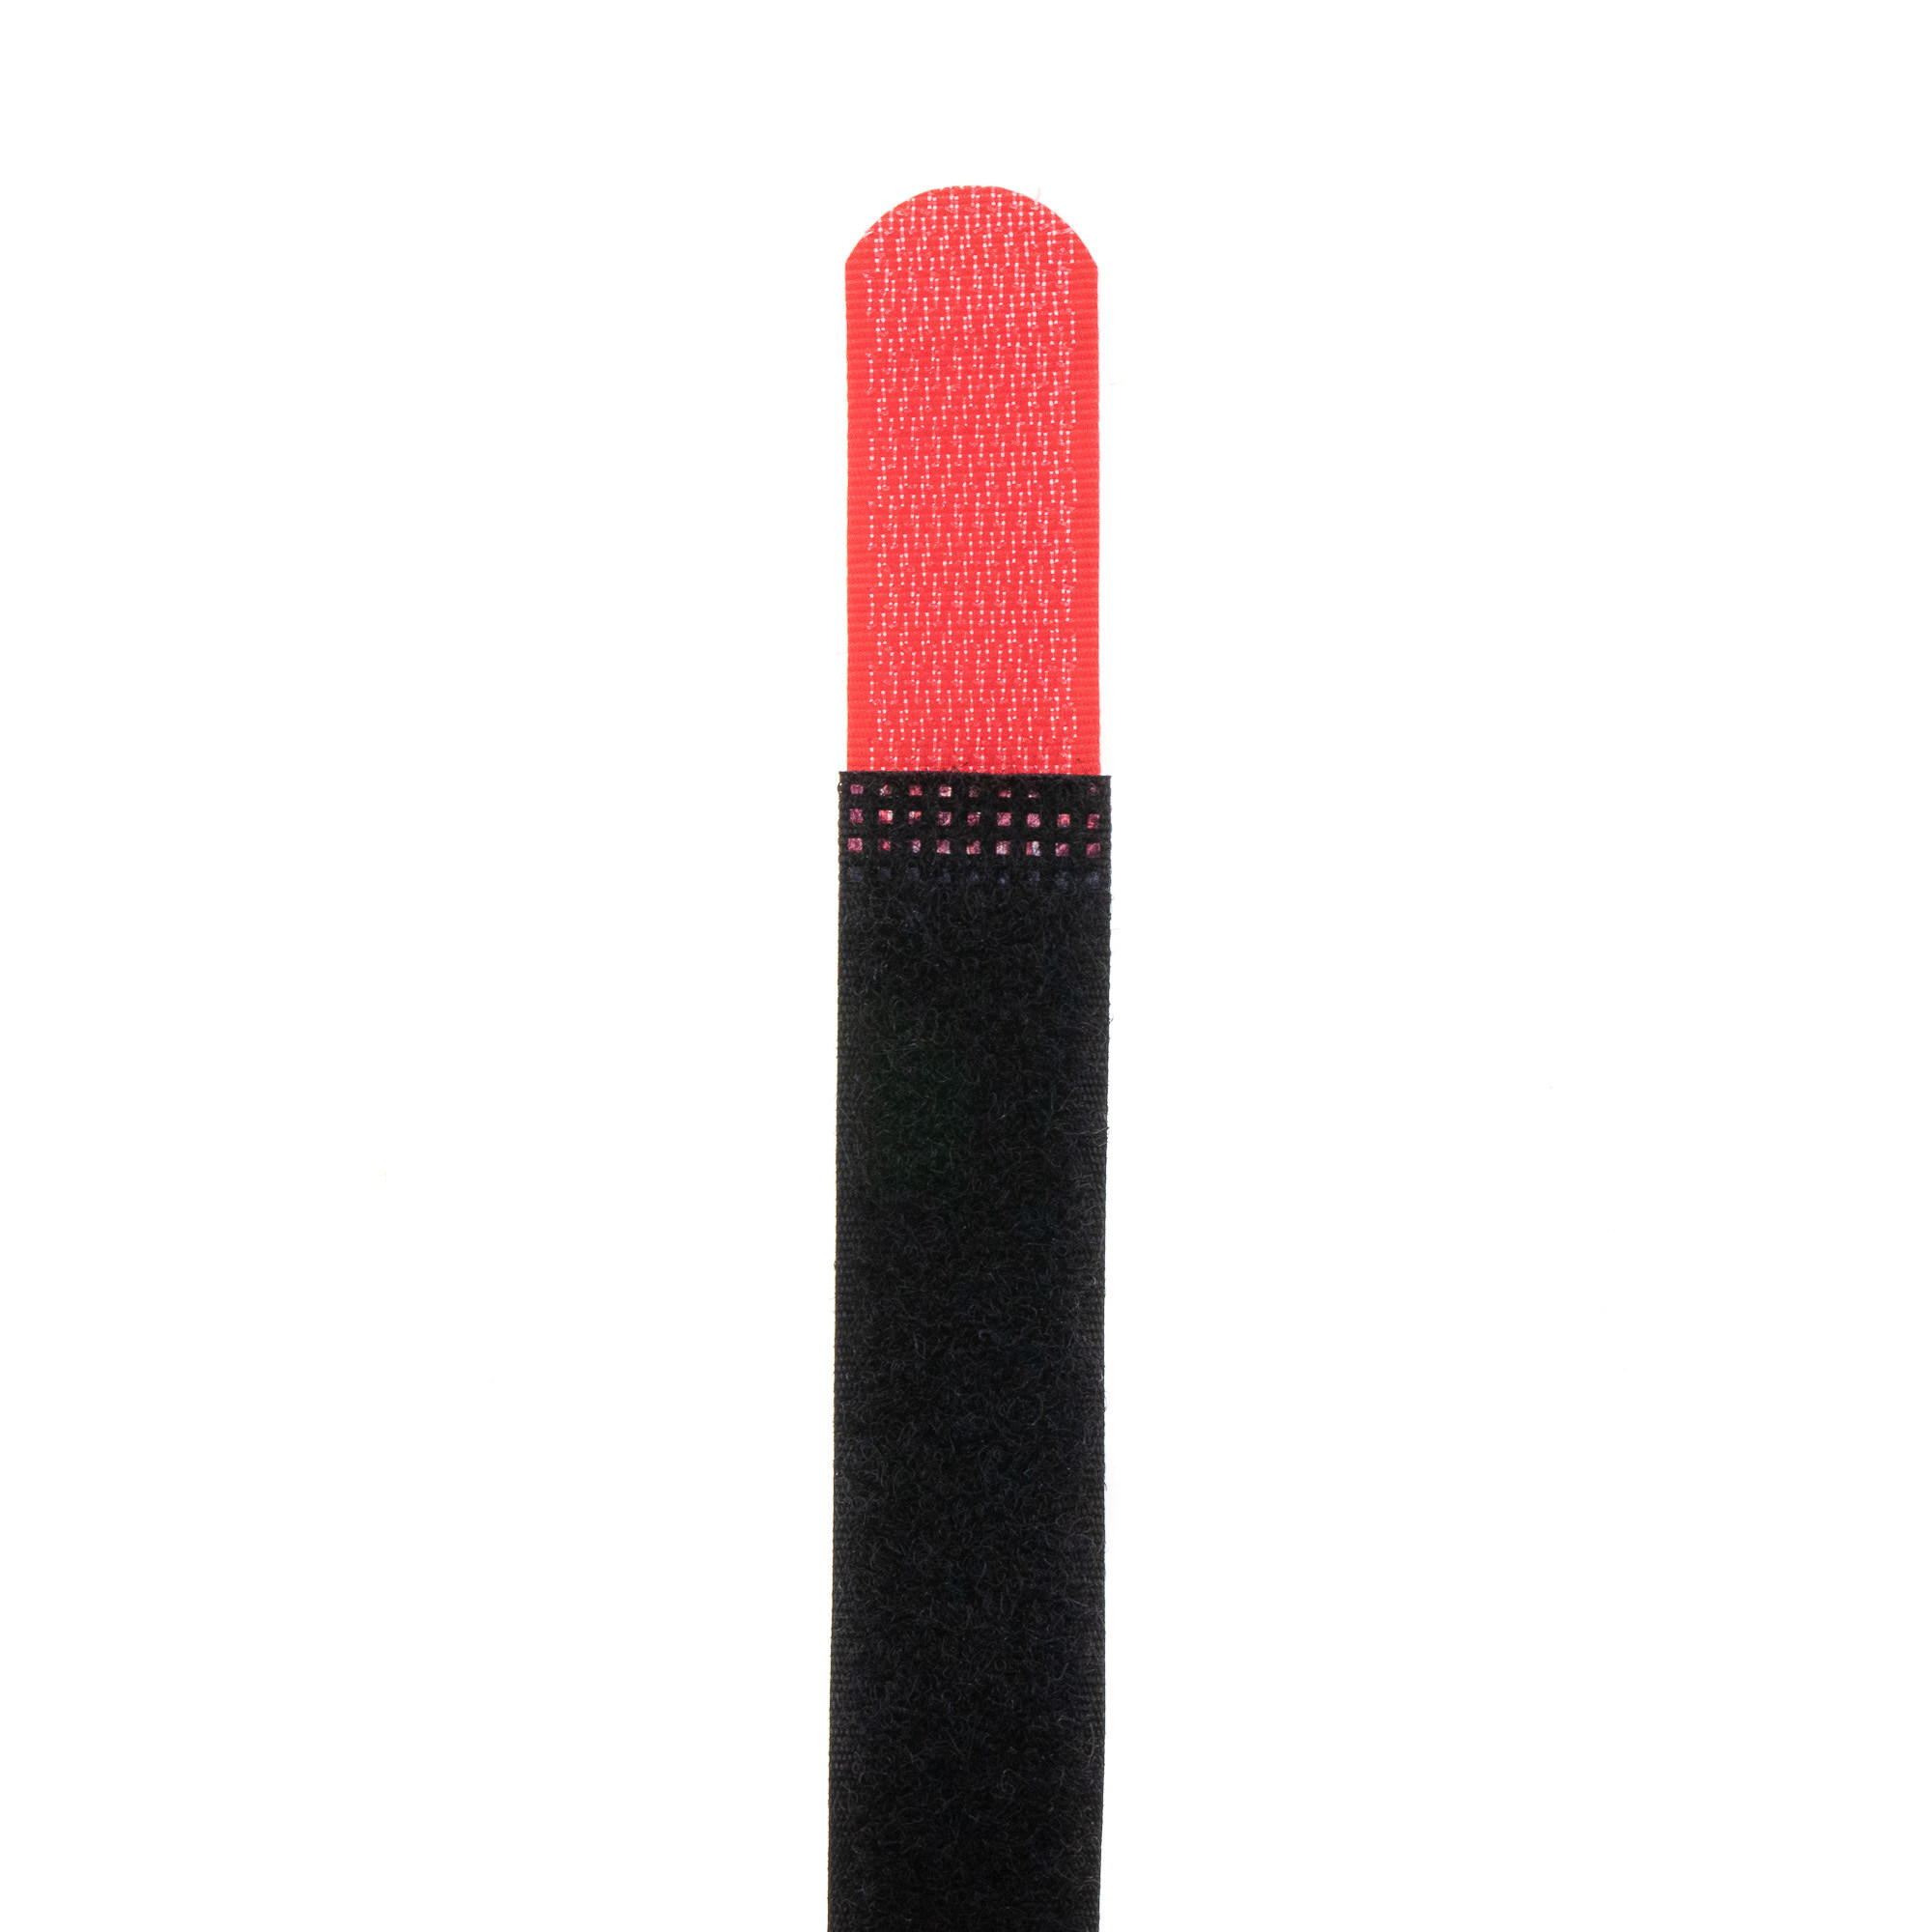 Hook-and-loop strap 300x20, black/red, 10PCS